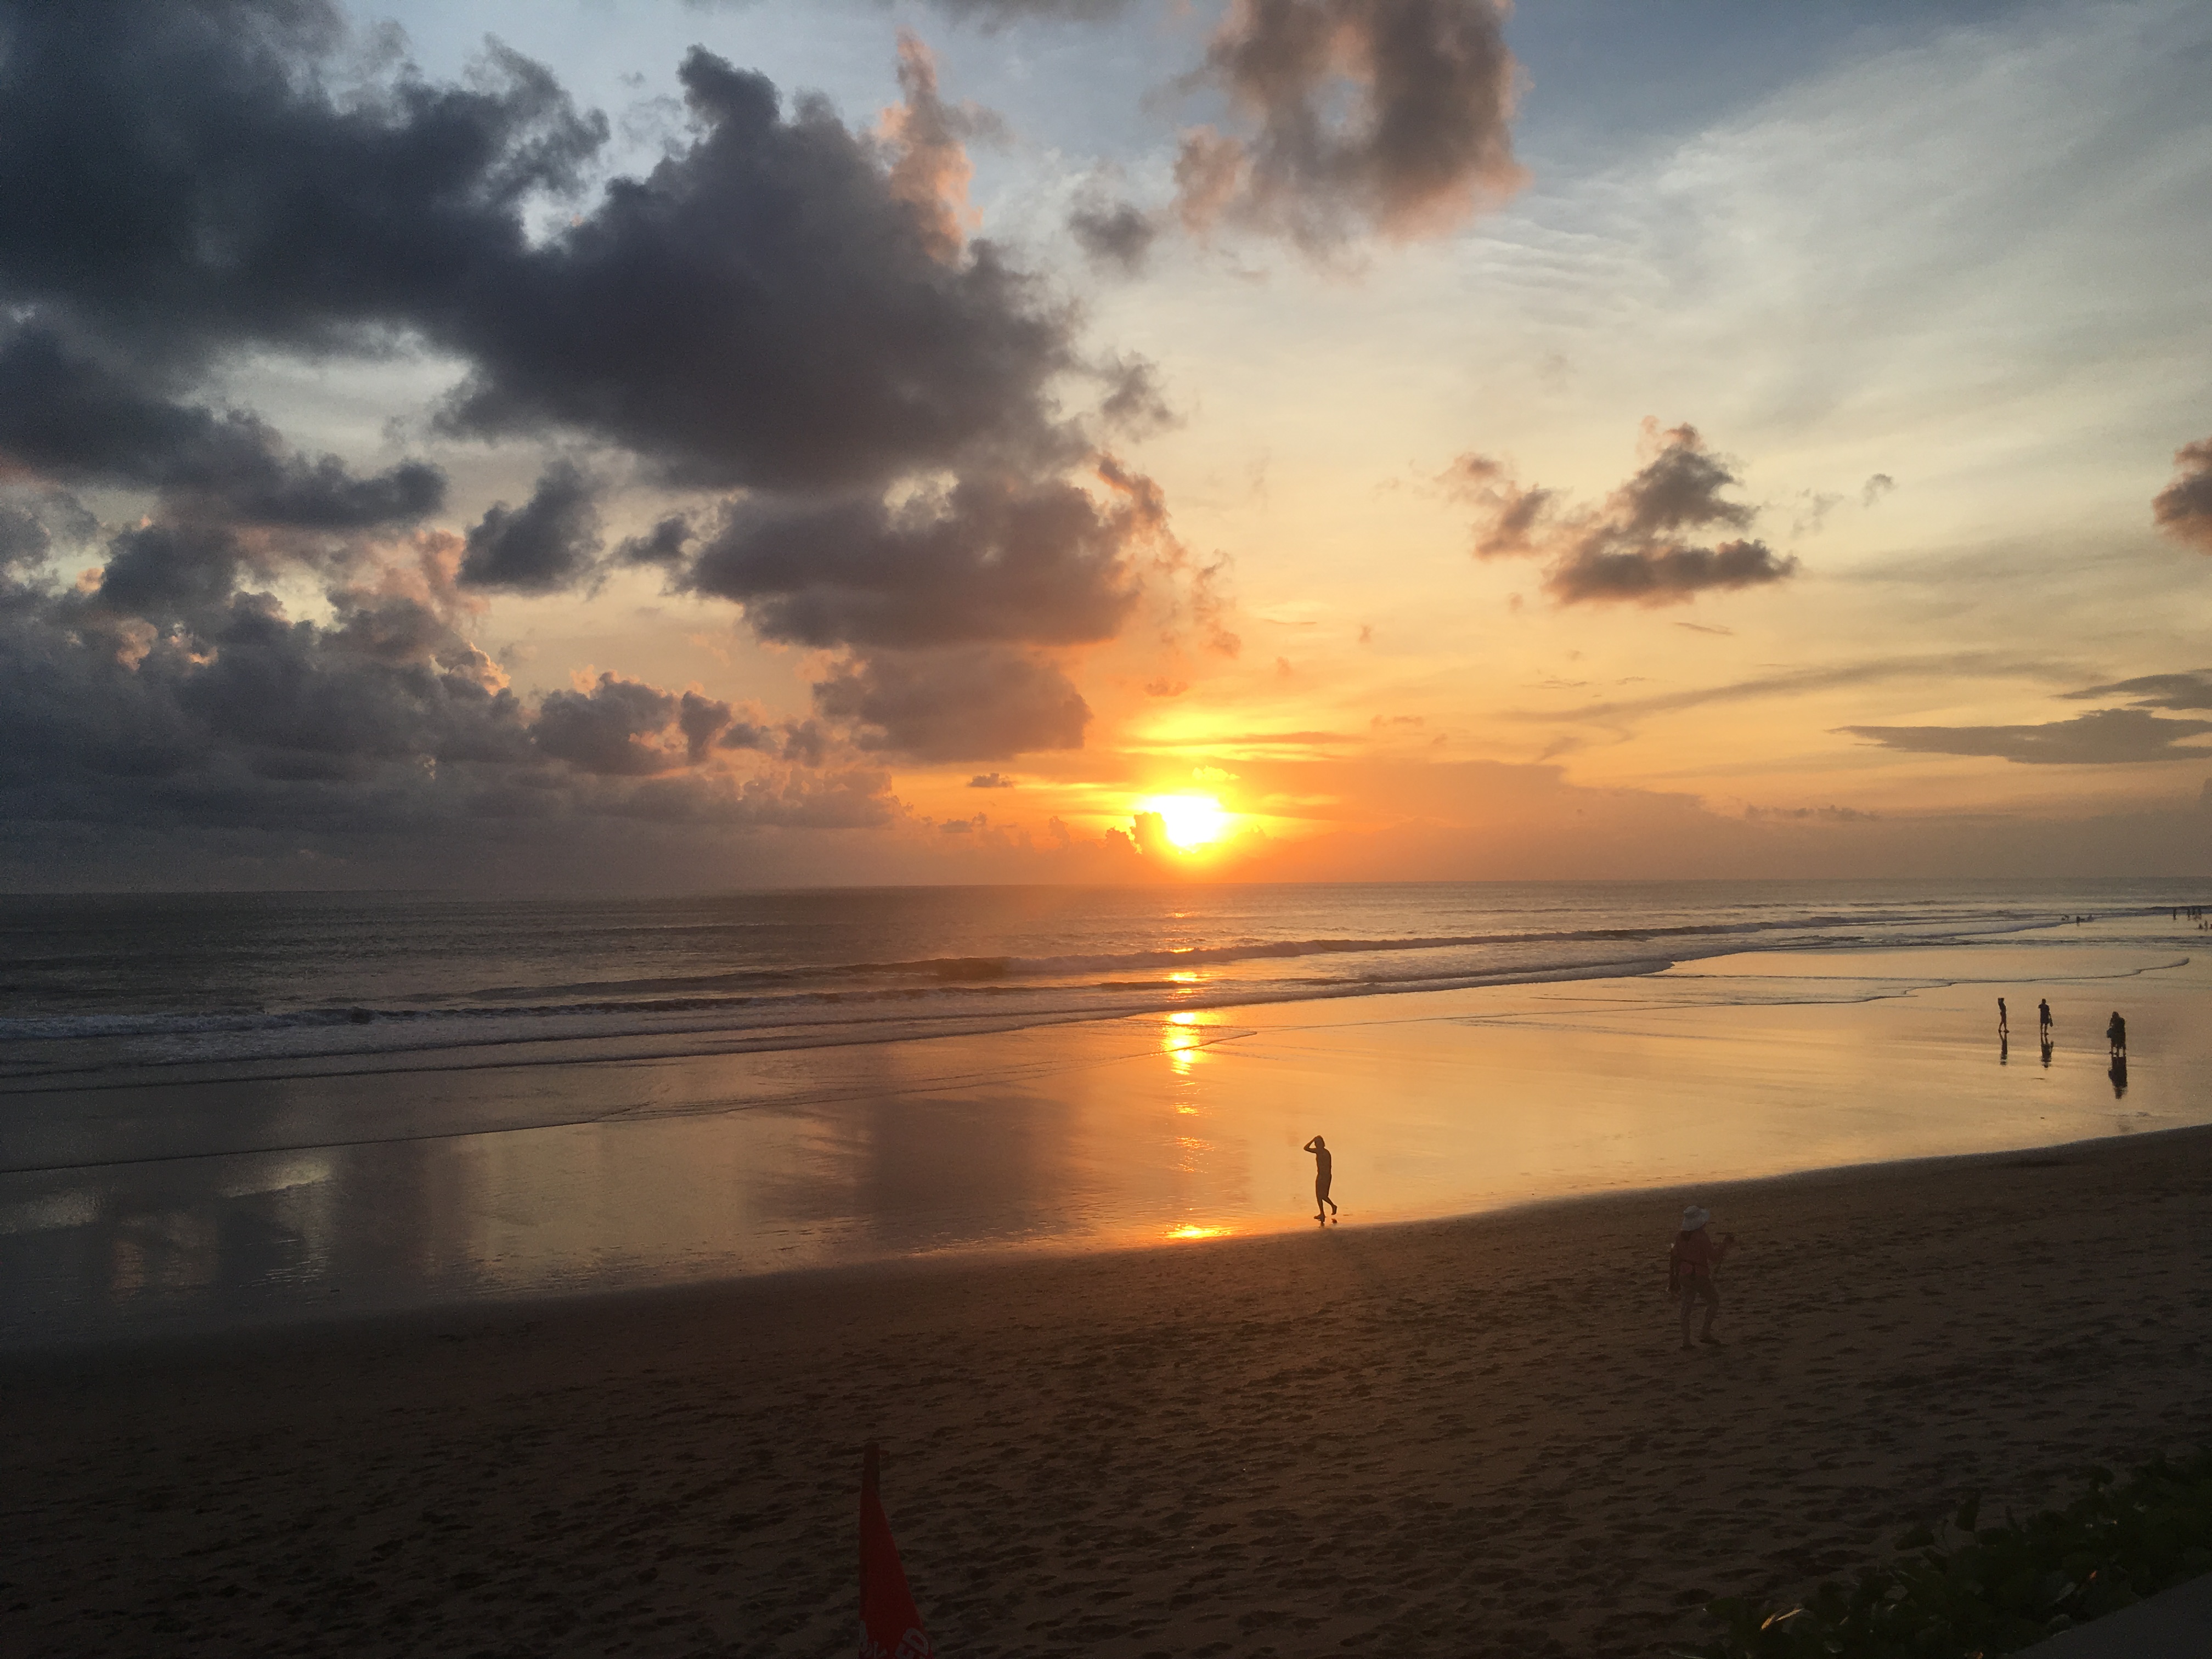 Bali sunset, Indonesia